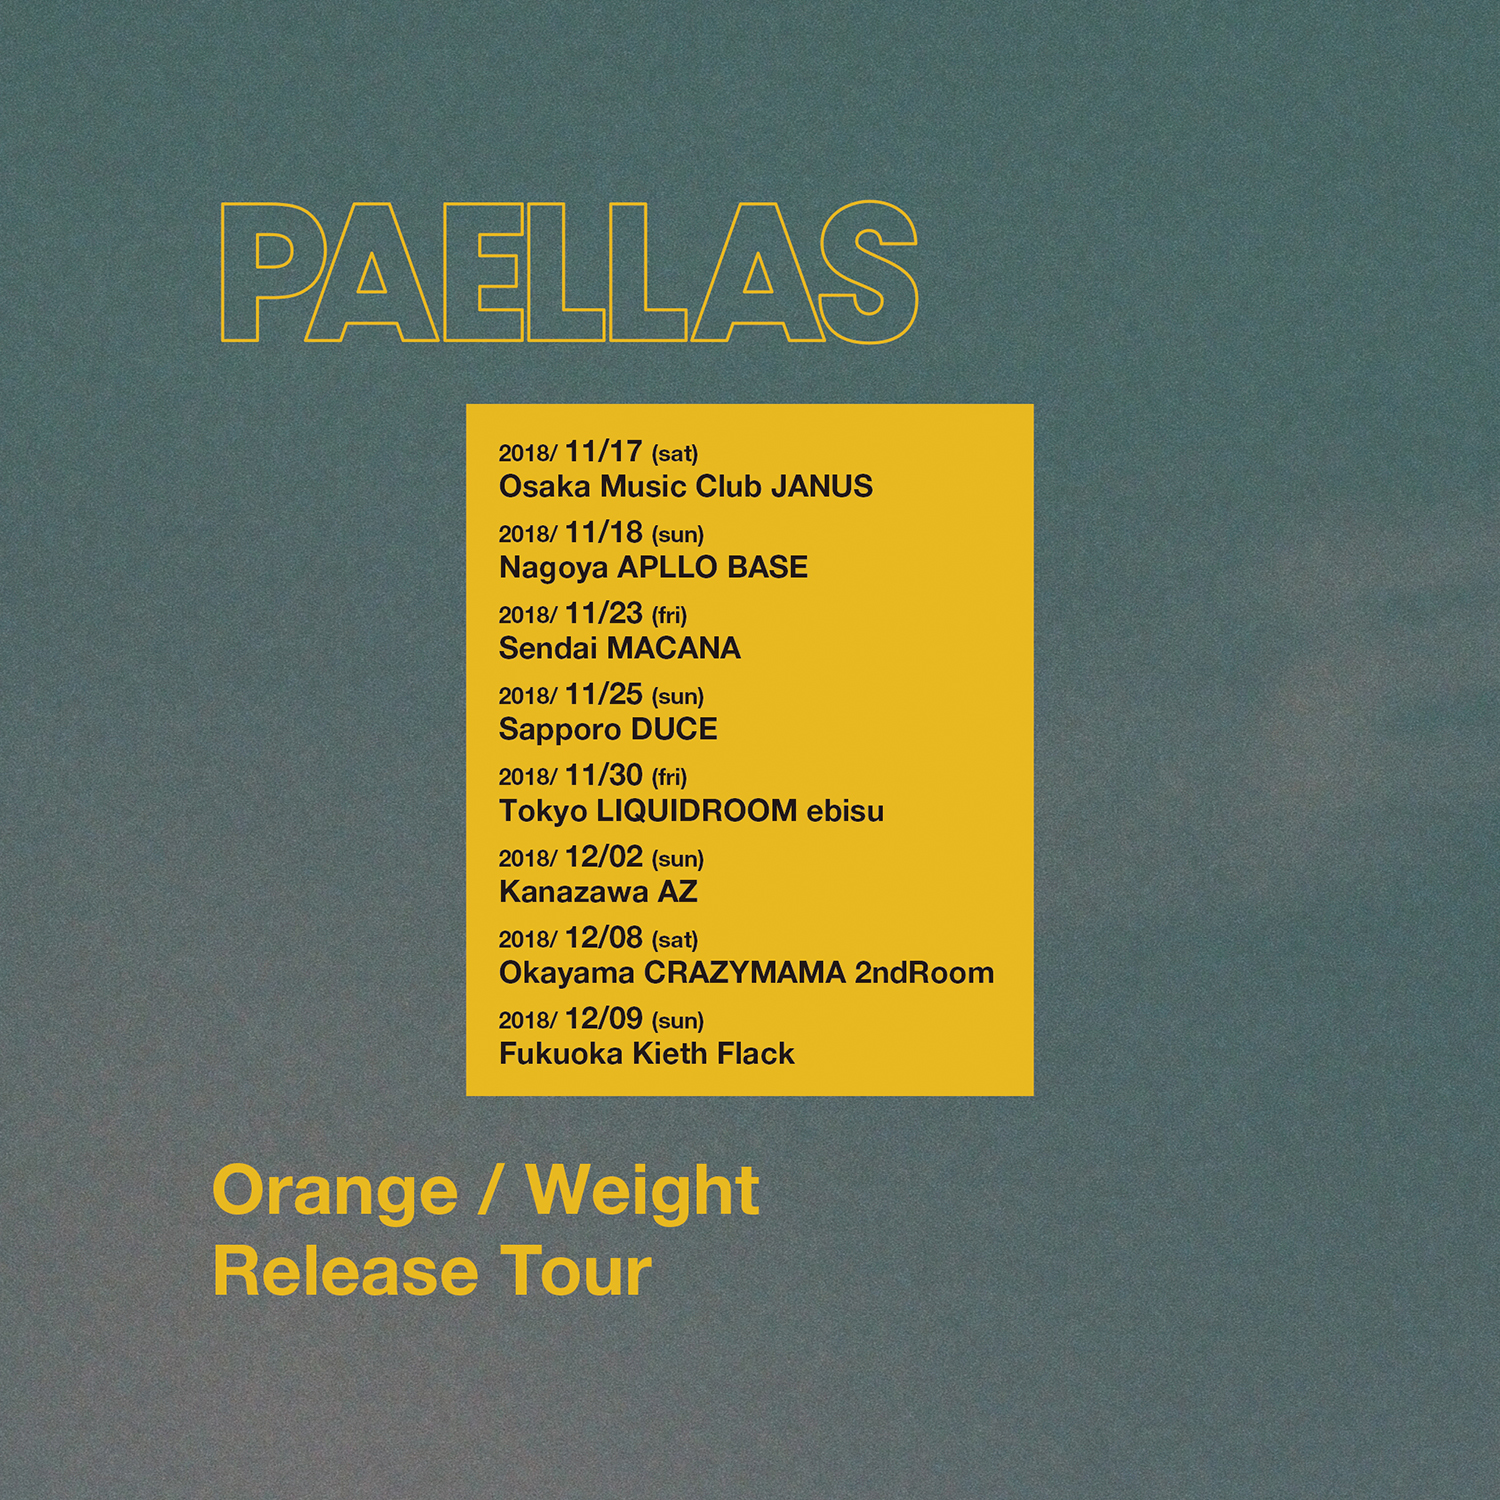 PAELLAS Orange / Weight Release Tour